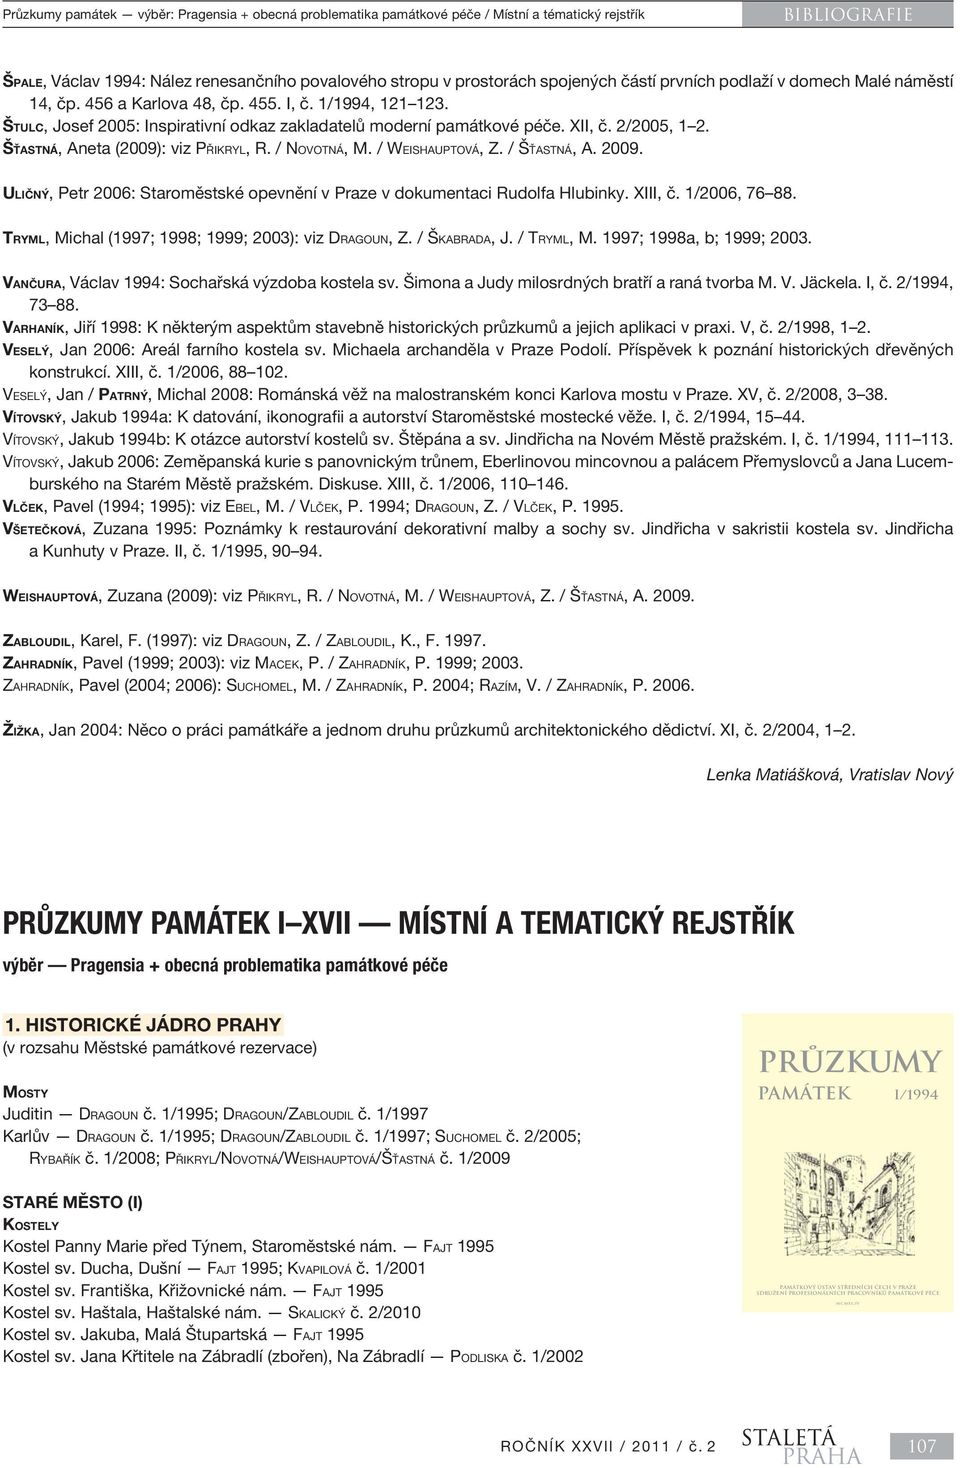 ŠŤASTNÁ, Aneta (2009): viz PŘIKRYL, R. / NOVOTNÁ, M. / WEISHAUPTOVÁ, Z. / ŠŤASTNÁ, A. 2009. ULIČNÝ, Petr 2006: Staroměstské opevnění v Praze v dokumentaci Rudolfa Hlubinky. XIII, č. 1/2006, 76 88.